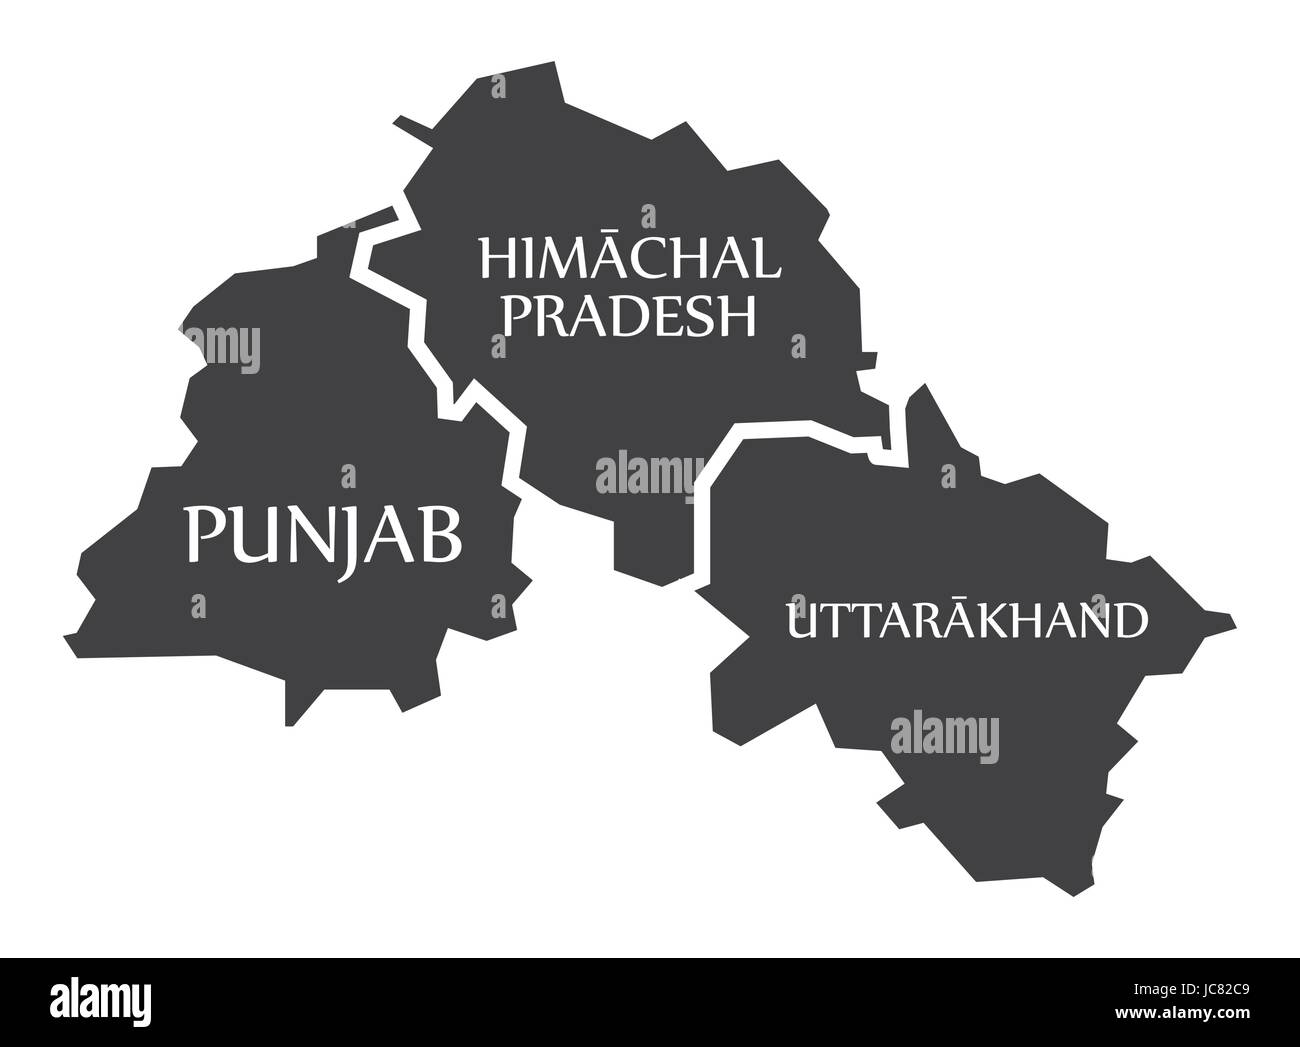 Punjab - Himachal Pradesh - Uttarakhand Map Illustration of Indian states Stock Vector